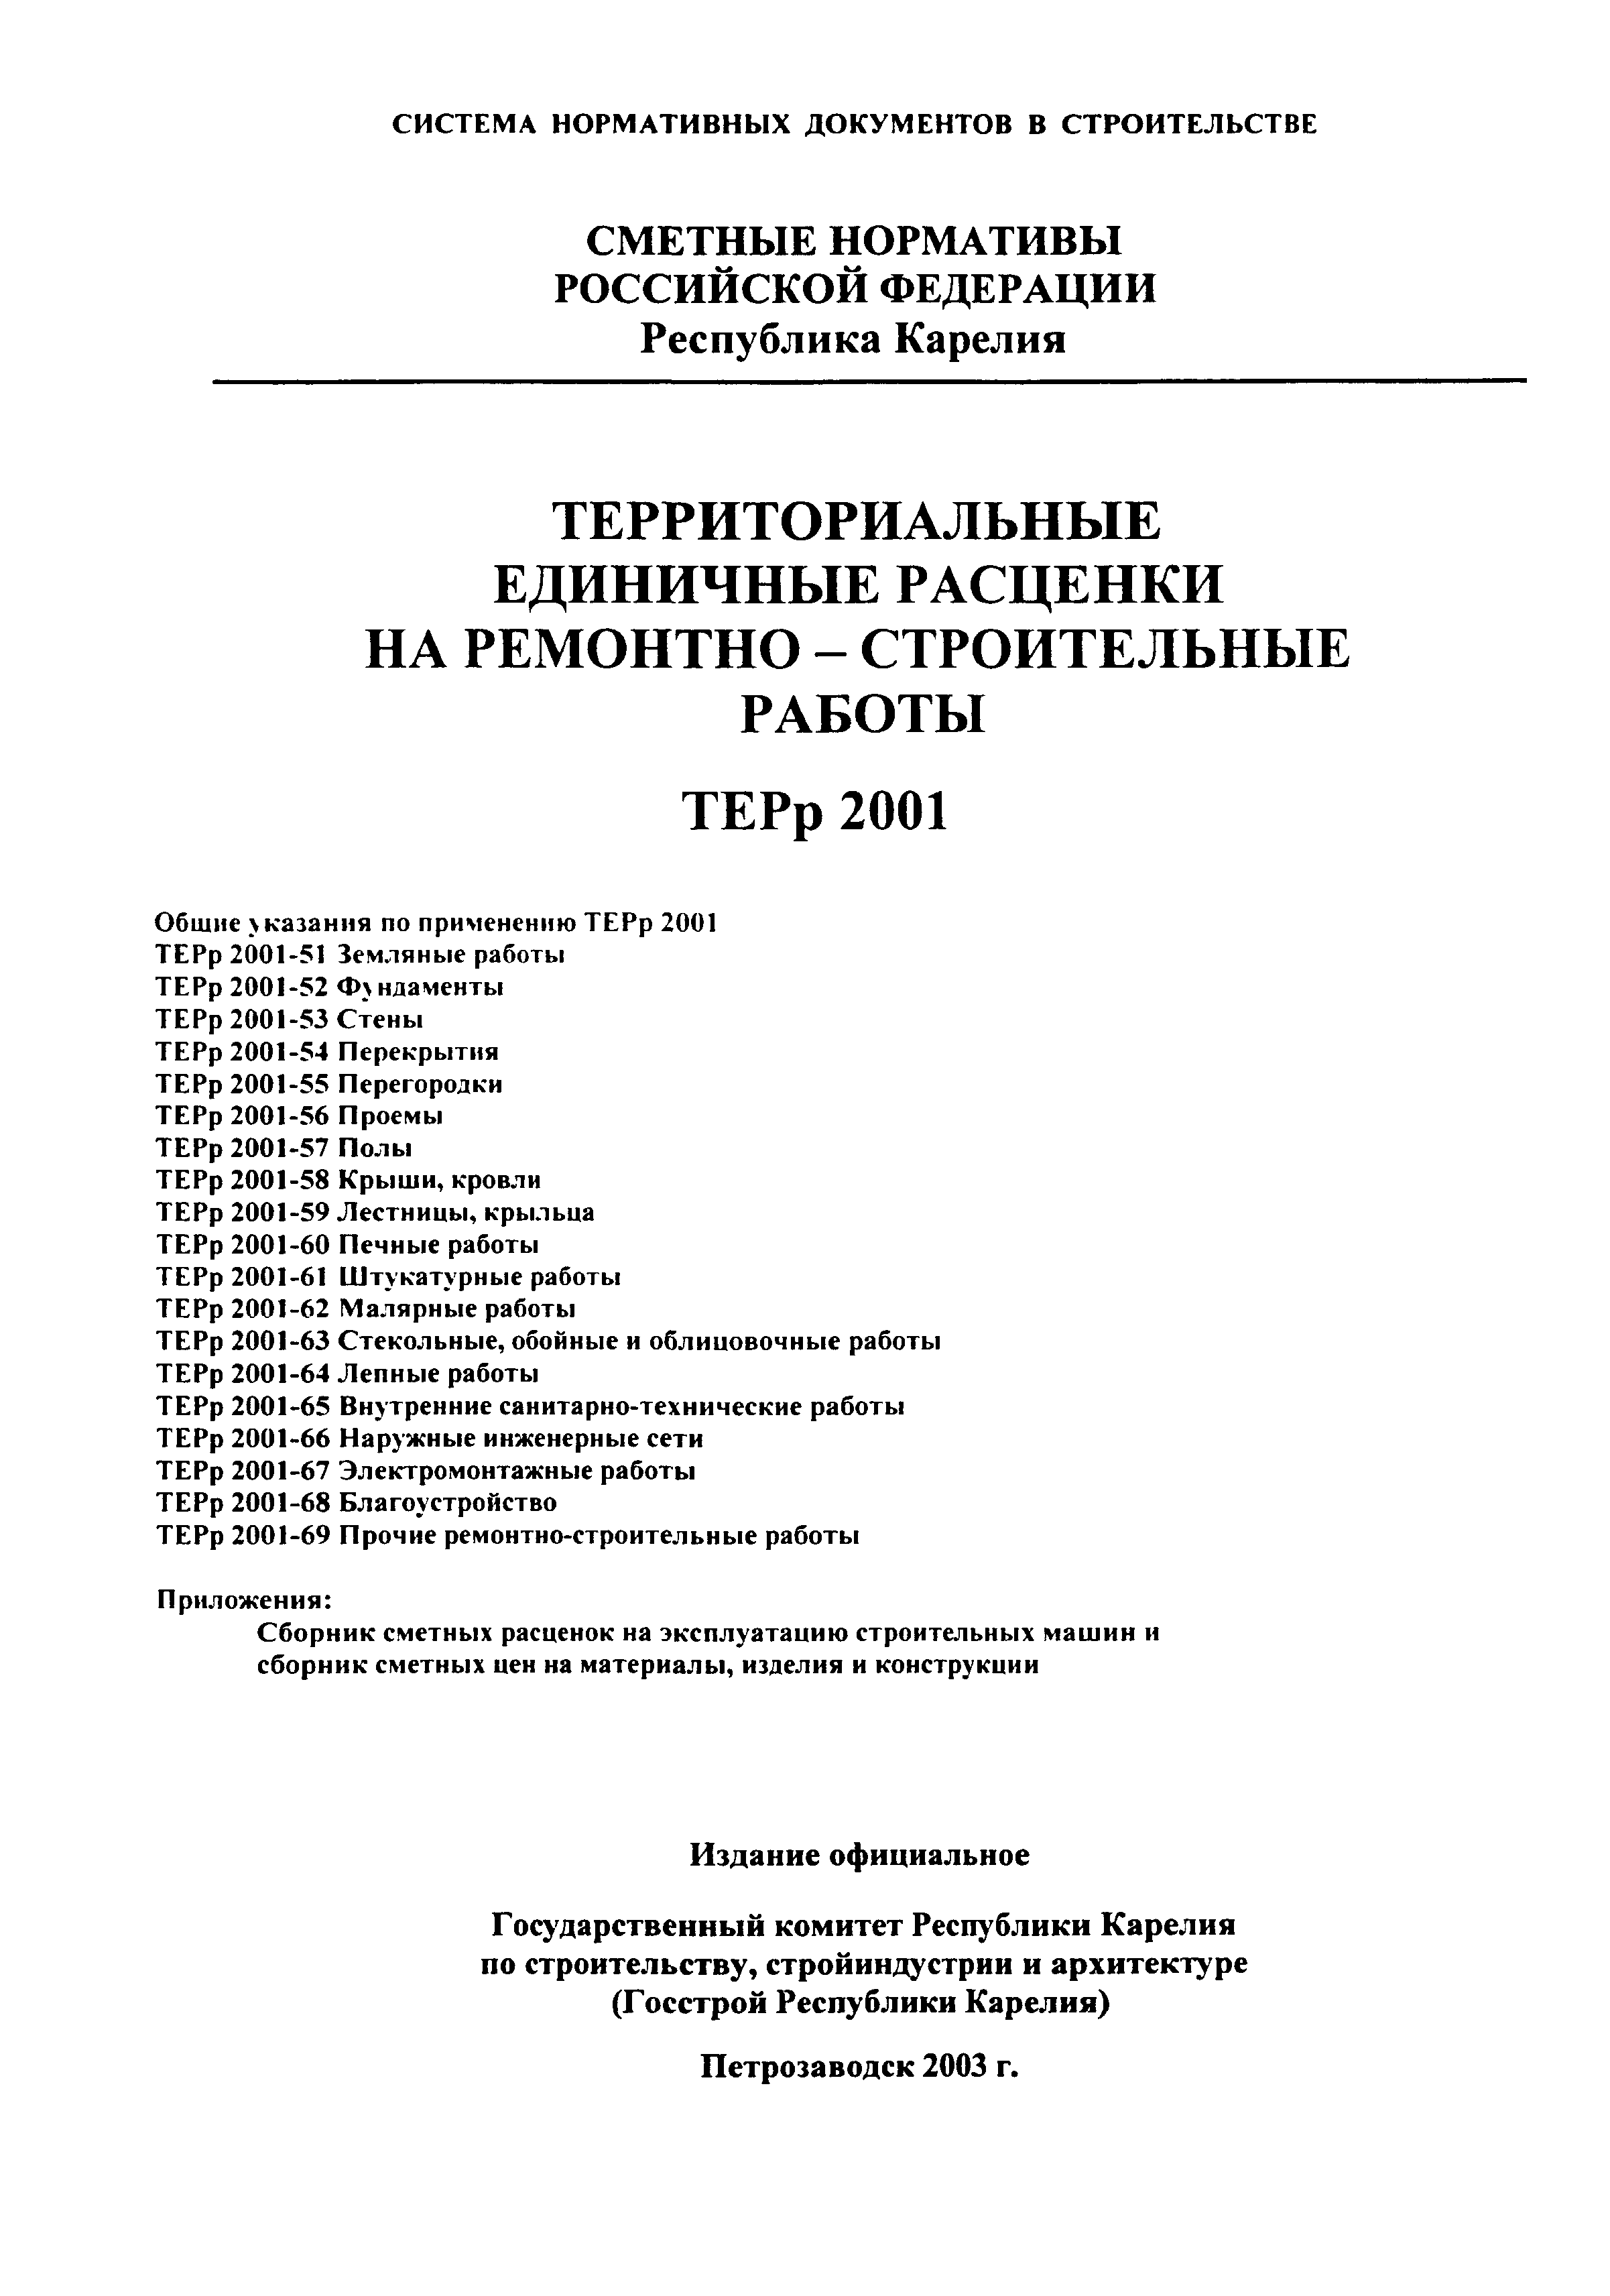 ТЕРр Республика Карелия 2001-58